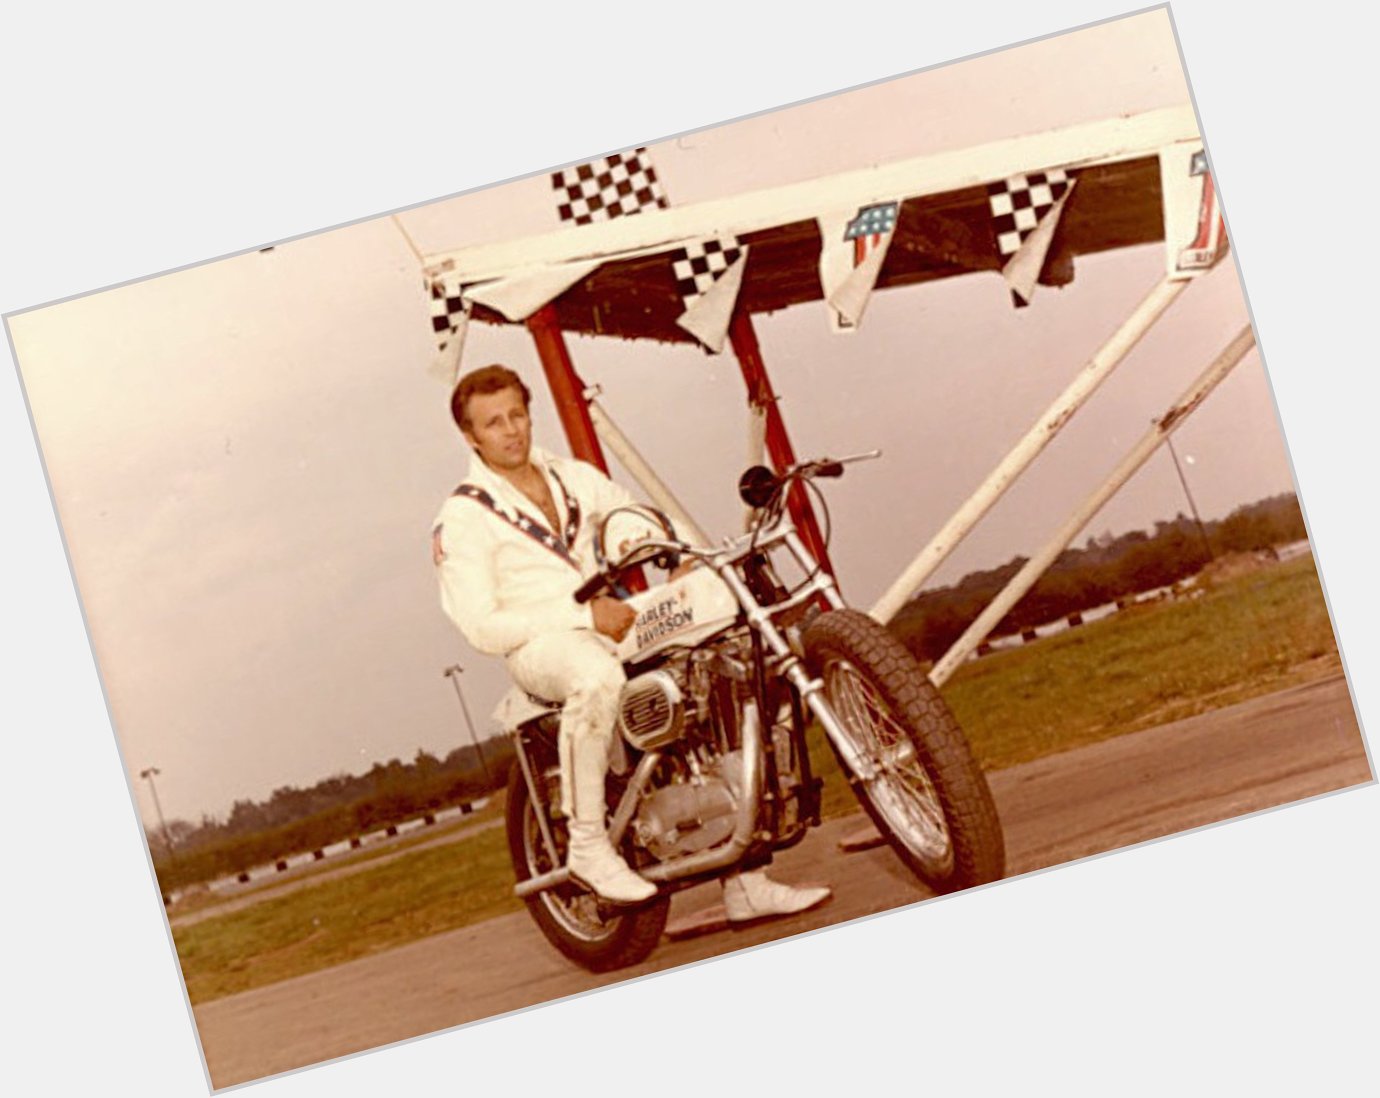 Happy birthday to the legend: Robert Craig (Evel) Knievel!! October 17, 1938- November 30, 2007 